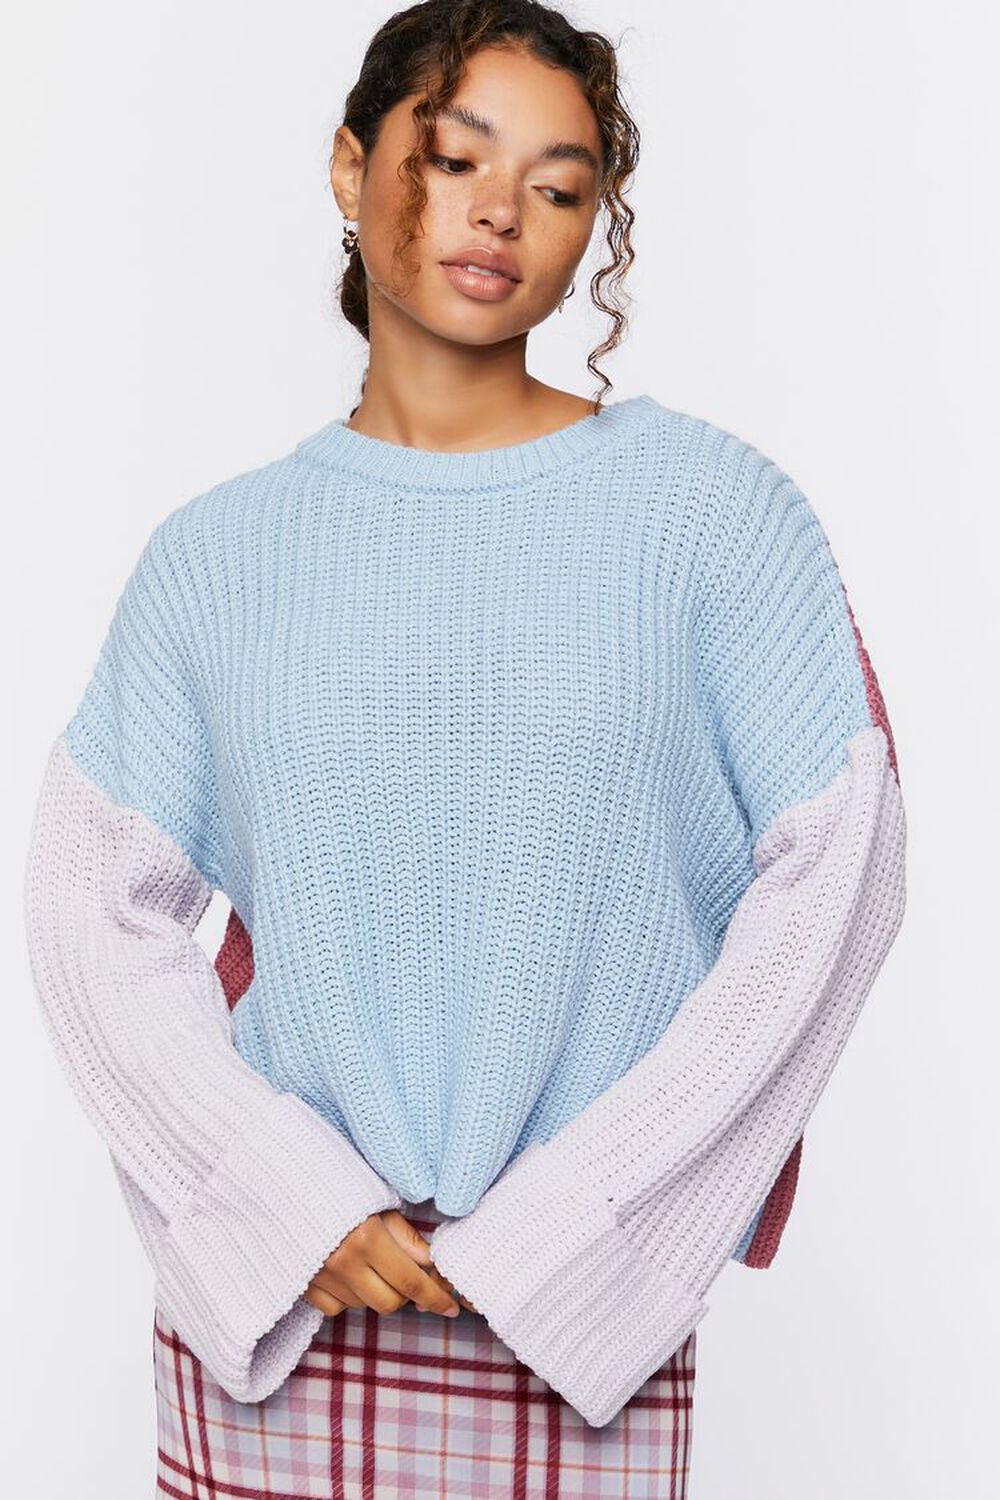 LAVENDER/MULTI Colorblock Bell-Sleeve Sweater, image 1